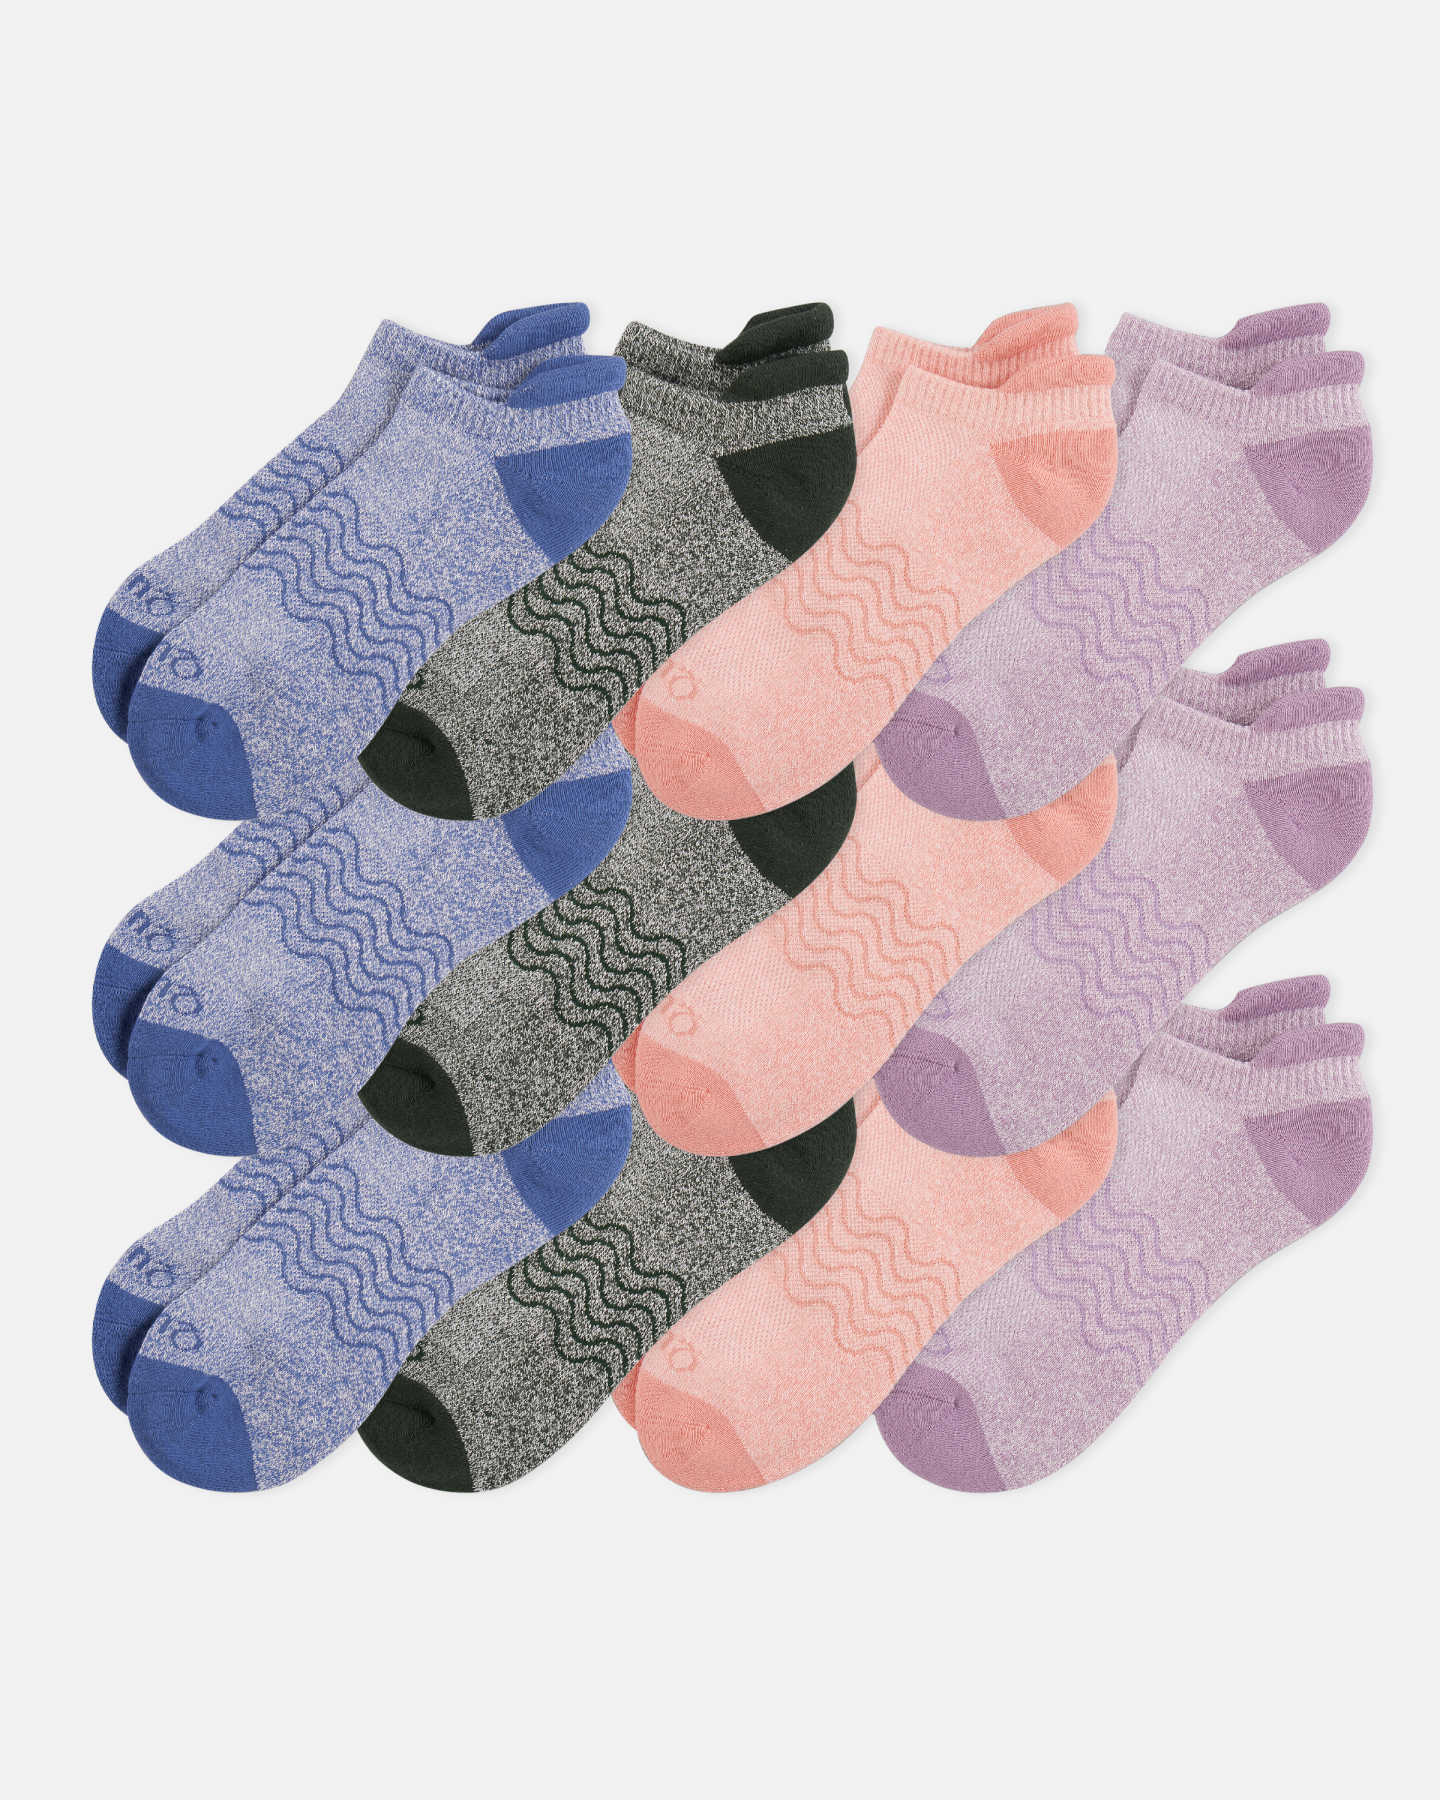 Organic Colorblock Marl Ankle Socks (12-pack) - Pink/Blue/Purple Mix - 0